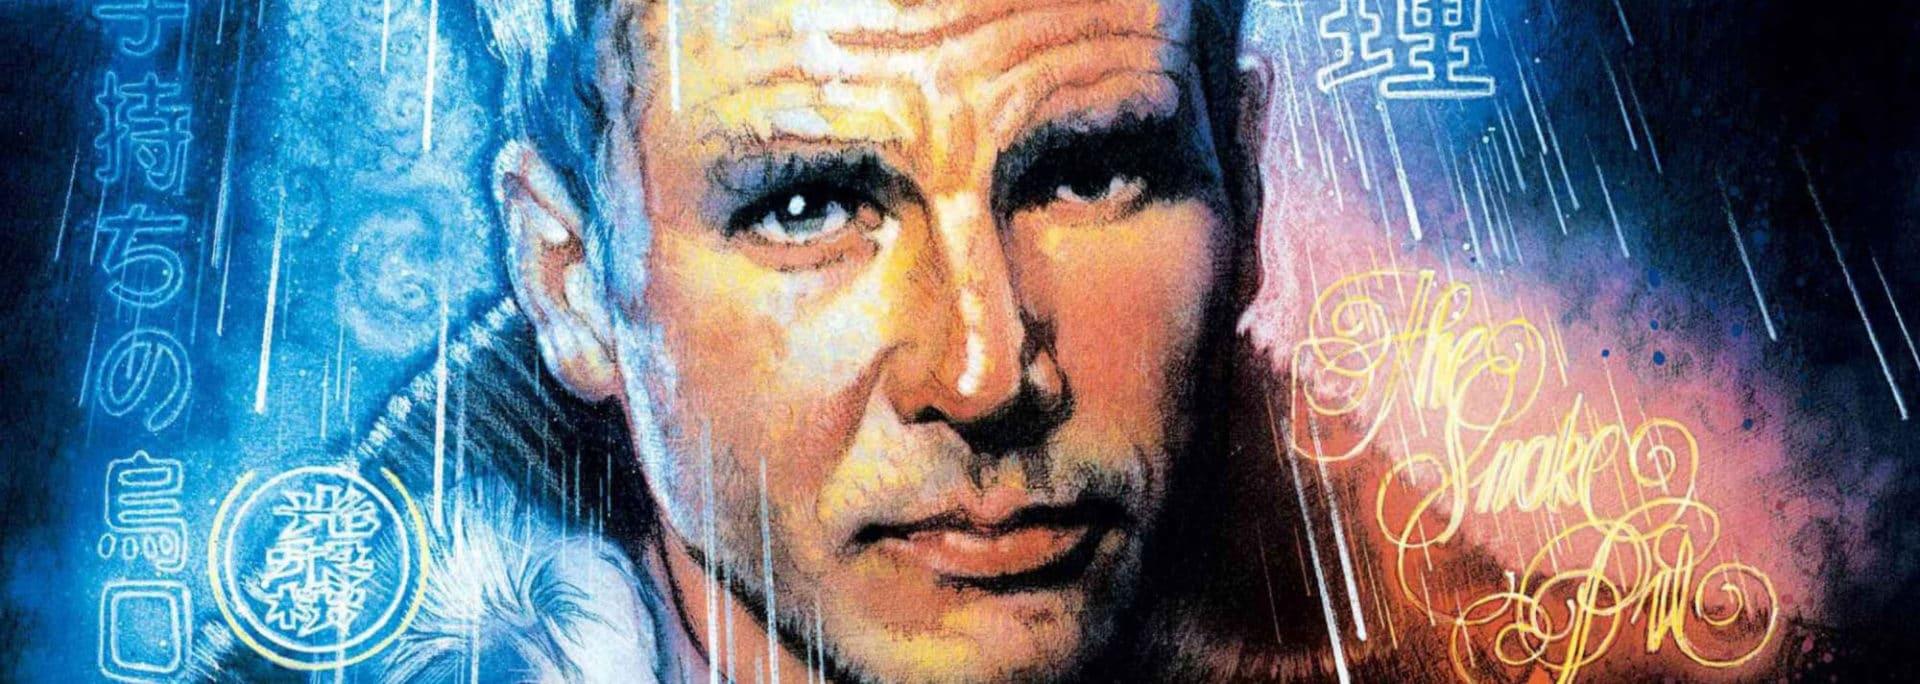 O futuro é vazio na obra seminal de Philip K. Dick, base do roteiro de Blade Runner